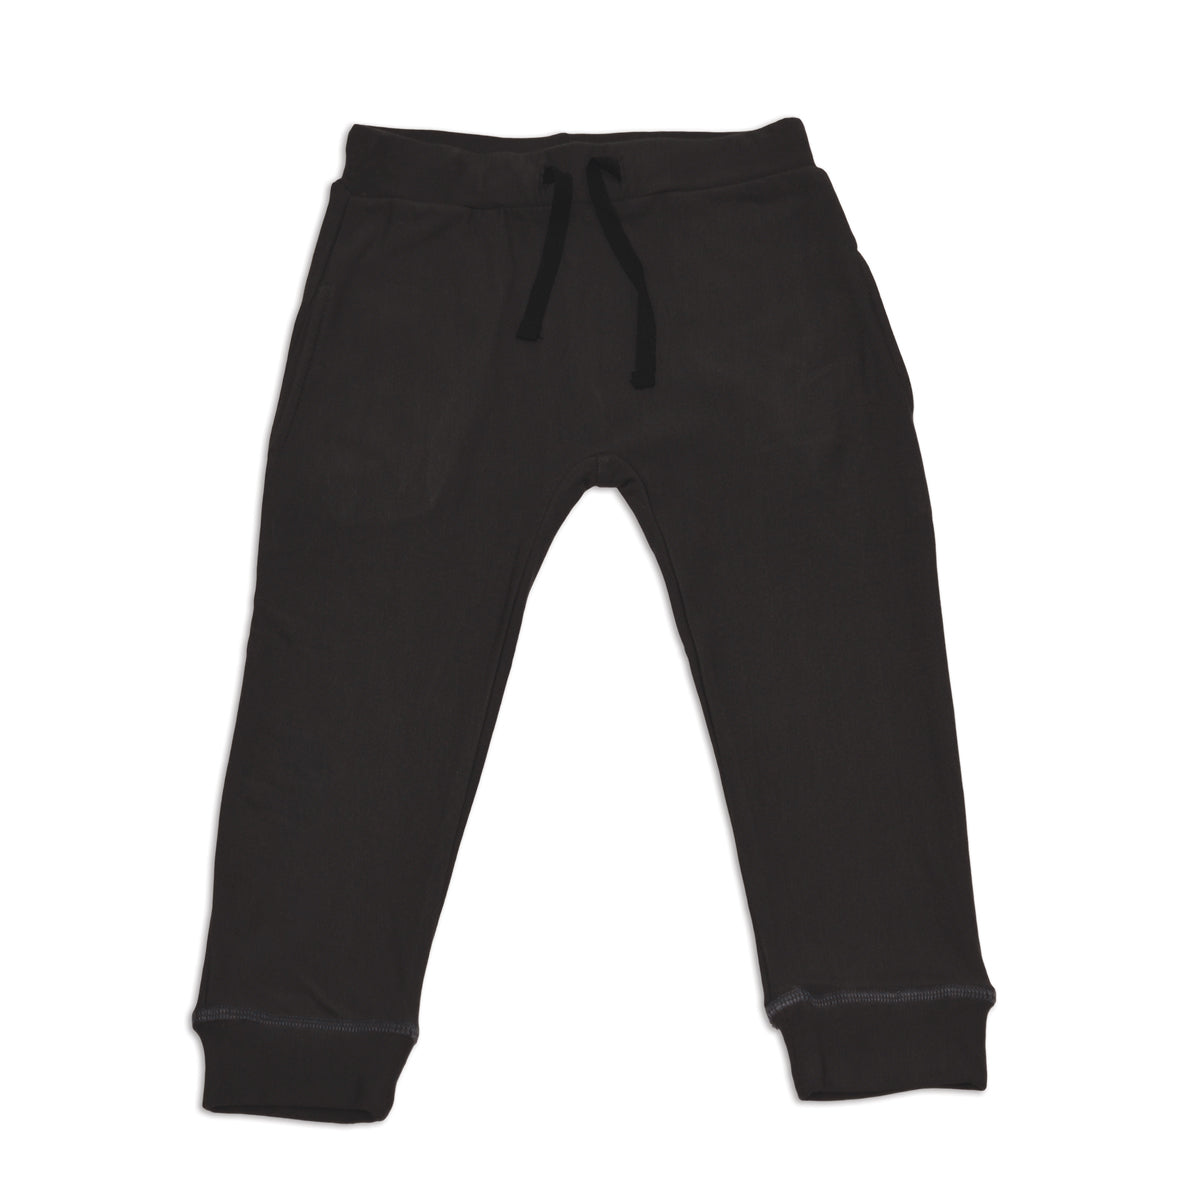 NWT FRESH PRODUCE Sanibel Stretch Capri Twist Leggings Pants Black